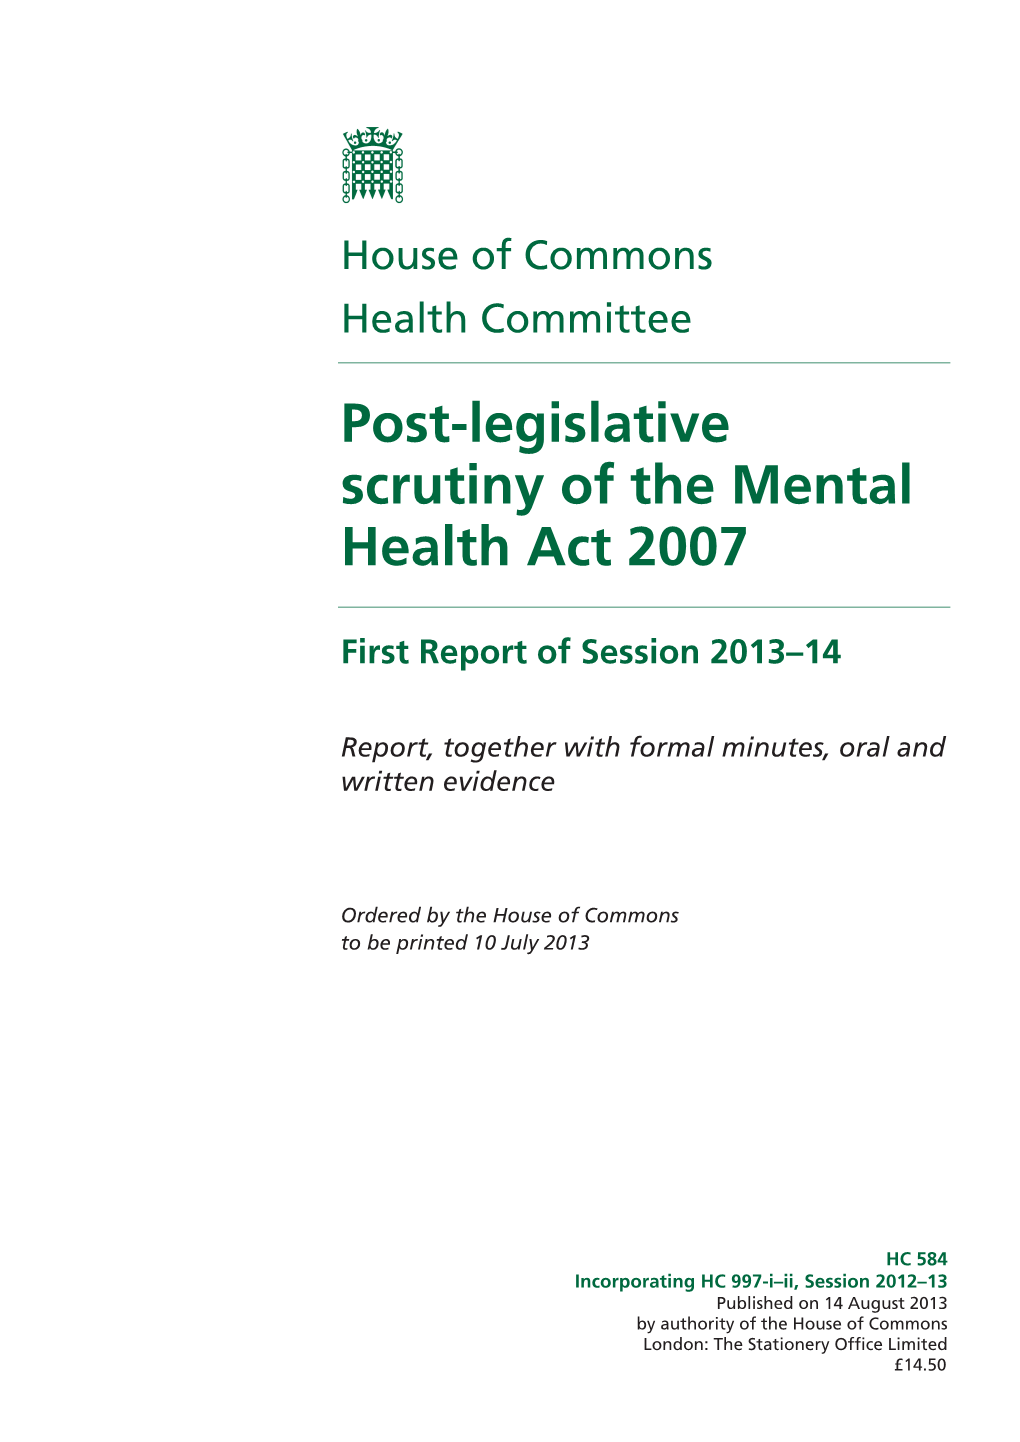 Post-Legislative Scrutiny of the Mental Health Act 2007